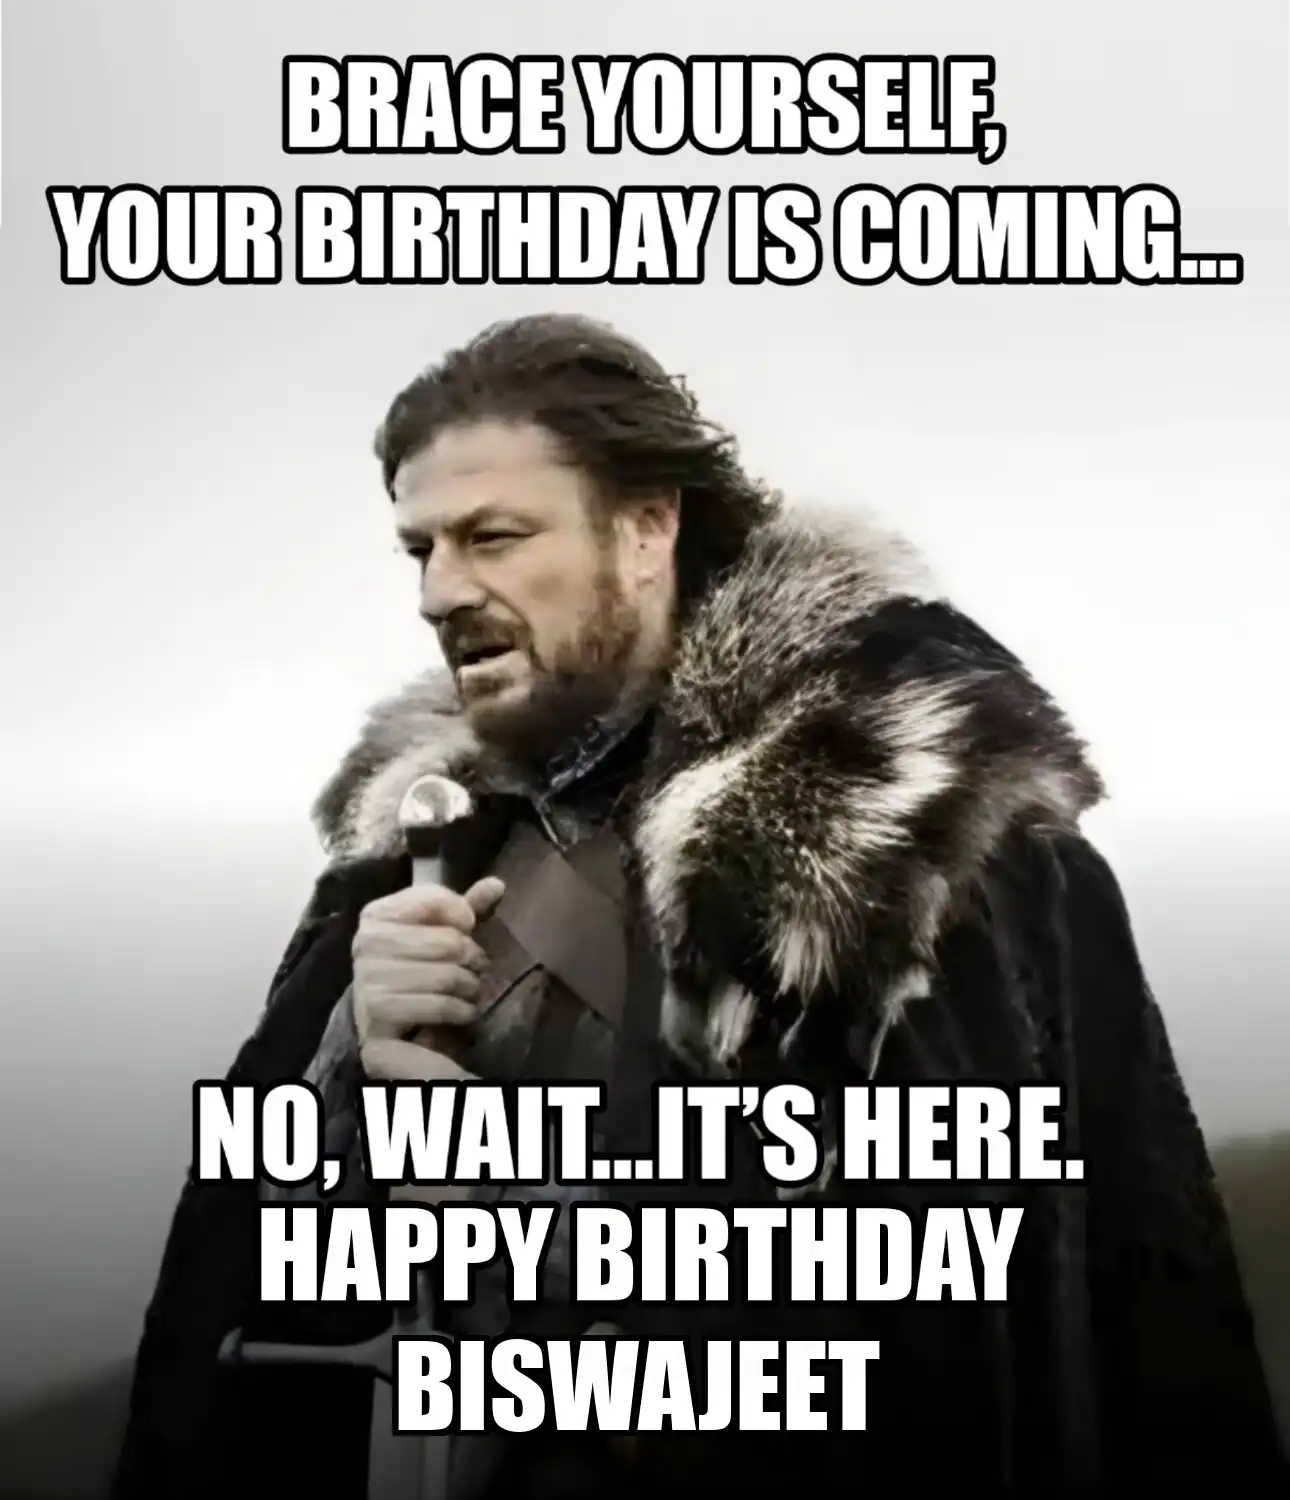 Happy Birthday Biswajeet Brace Yourself Your Birthday Is Coming Meme